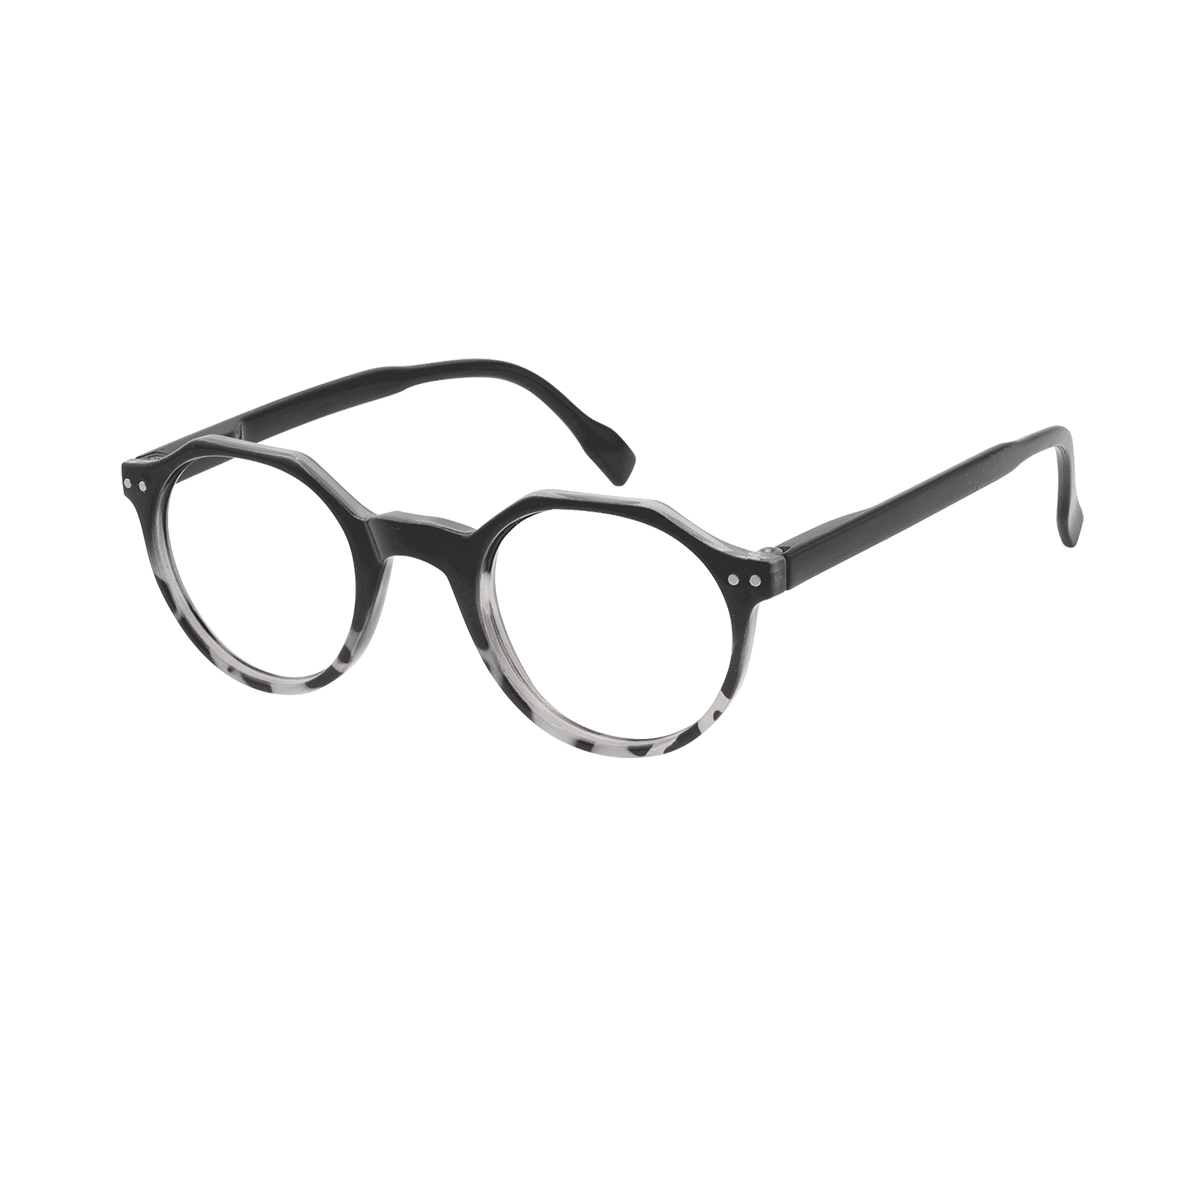 Ceos - Round Gradient-Black Reading Glasses for Men & Women